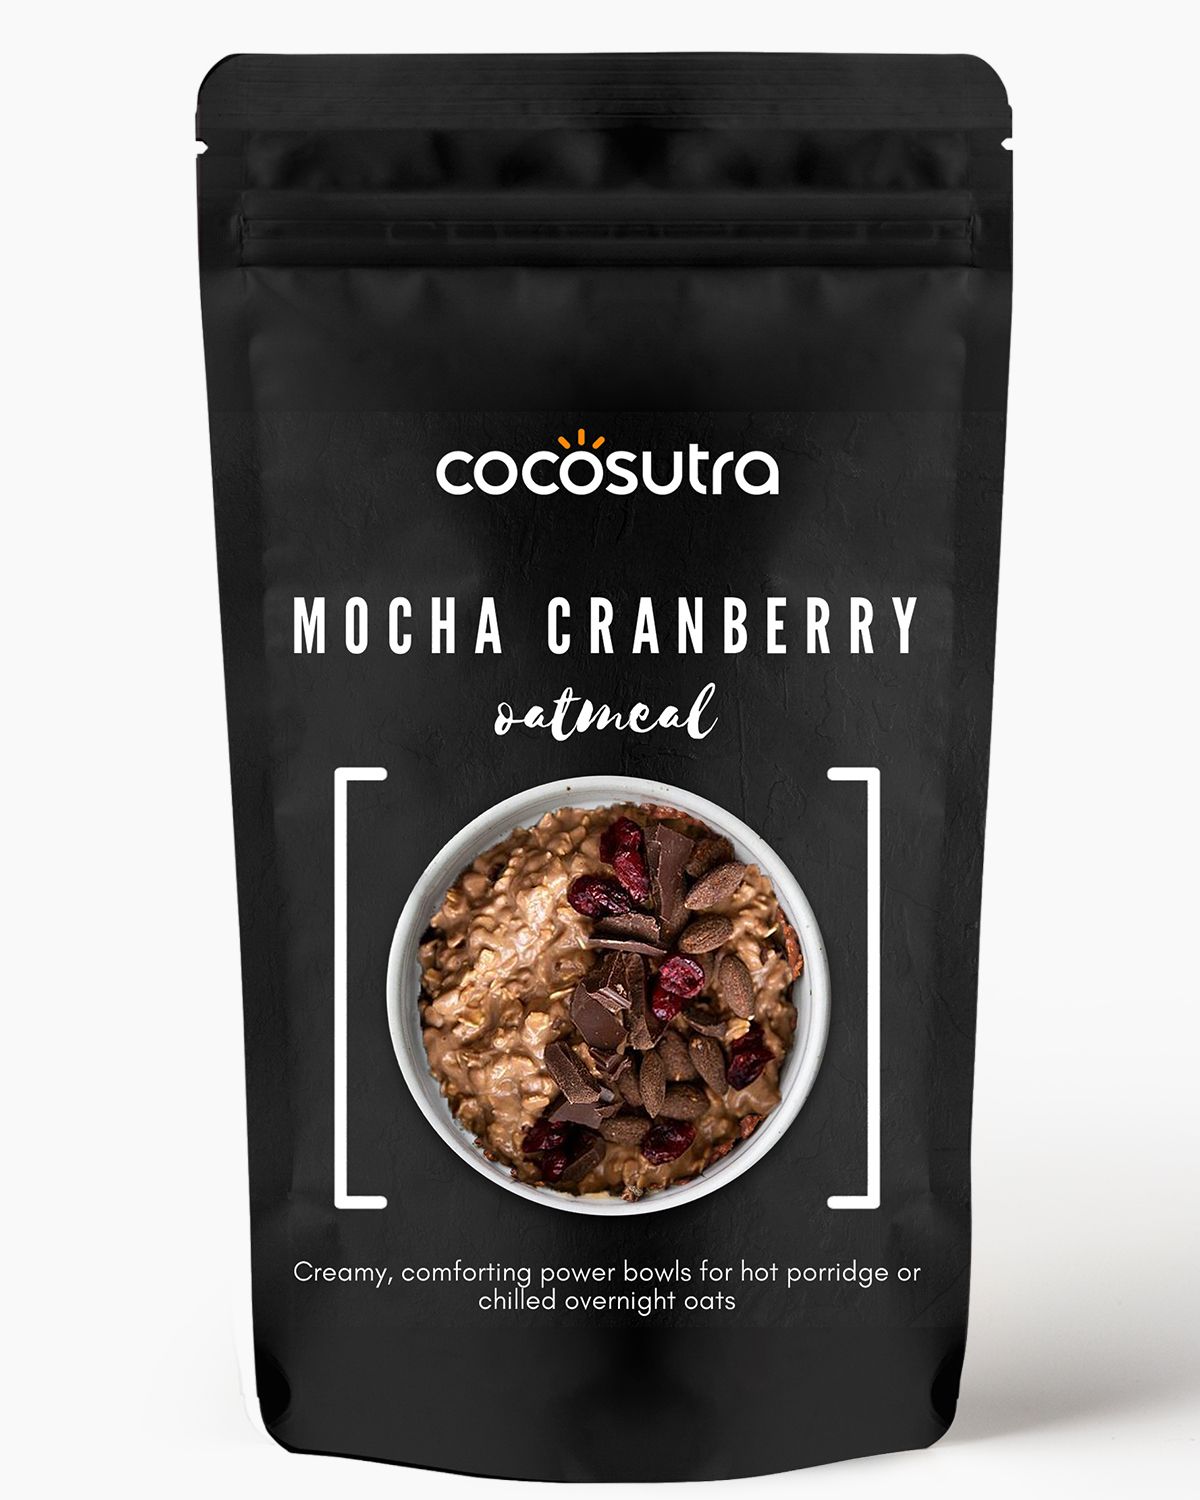 Cocosutra Mocha Cranberry Oatmeal Image